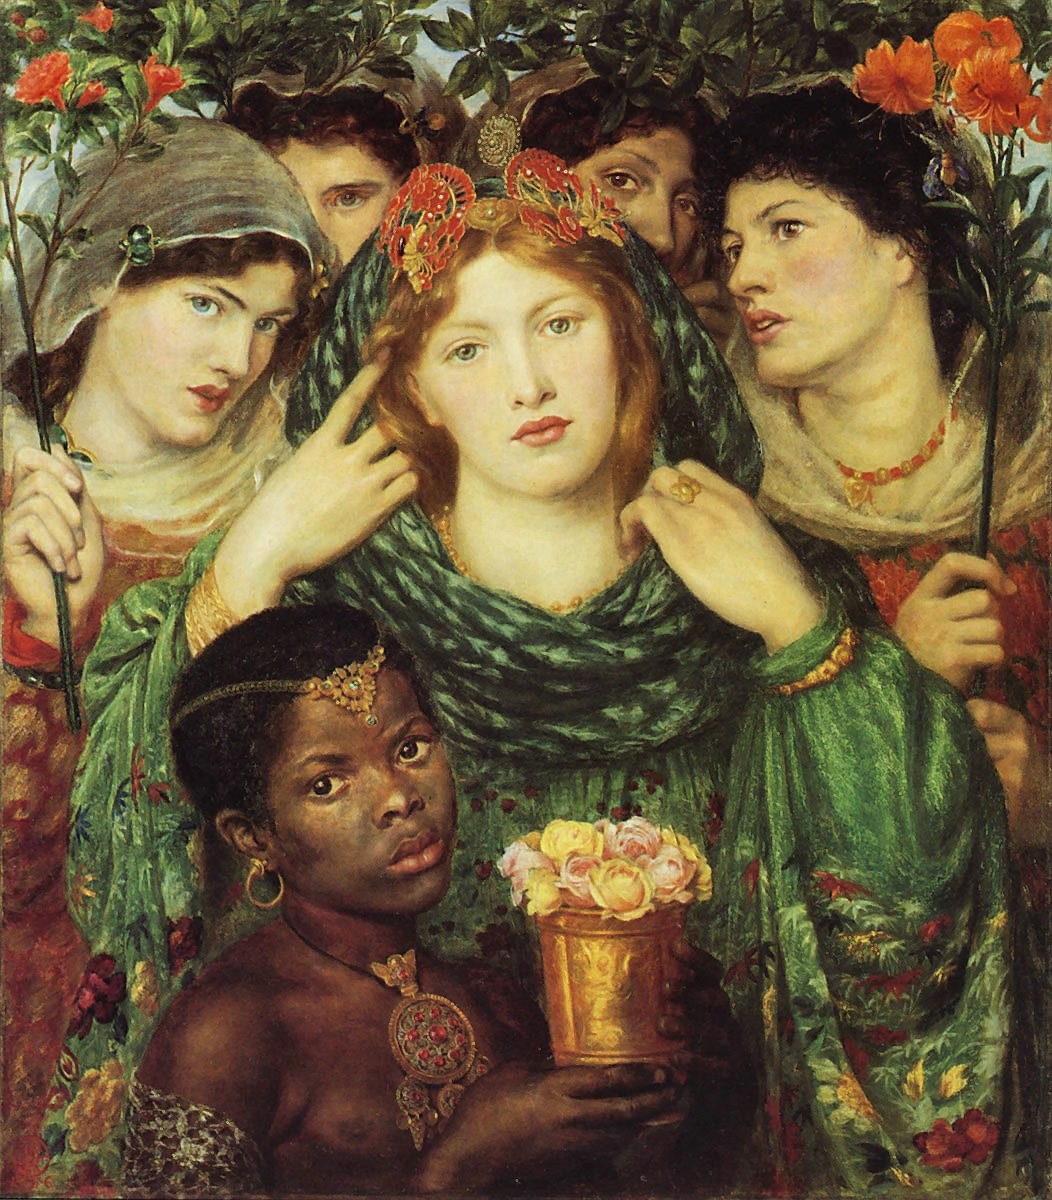 Dante+Gabriel+Rossetti-1828-1882 (149).jpg